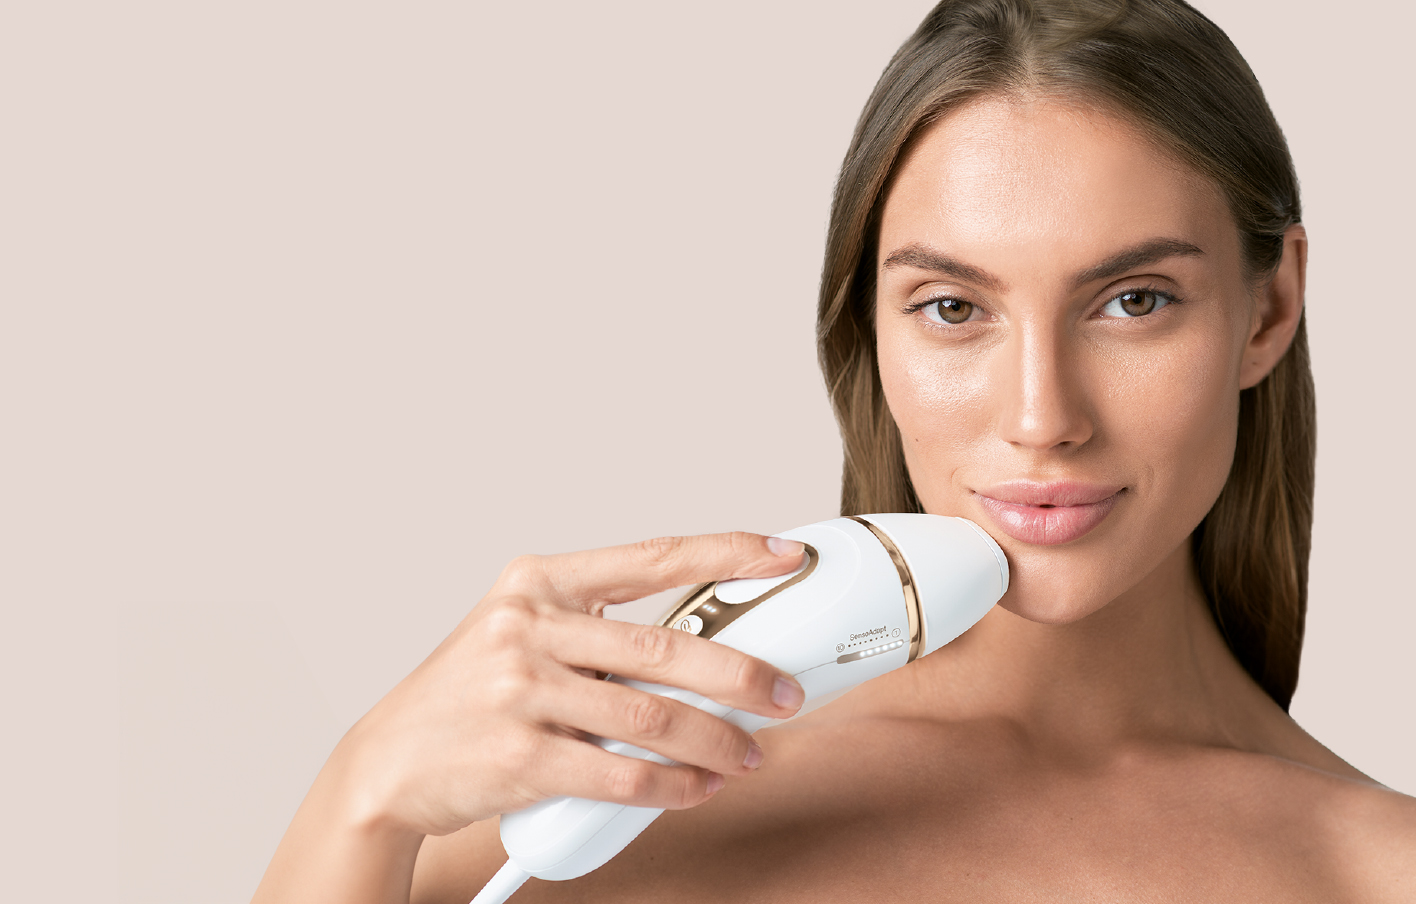 Braun Silk Expert Pro5 IPL Hair Removal Device for Women & Men - Lasting  Hair Regrowth Reduction, Virtually Painless Alternative to Salon Laser